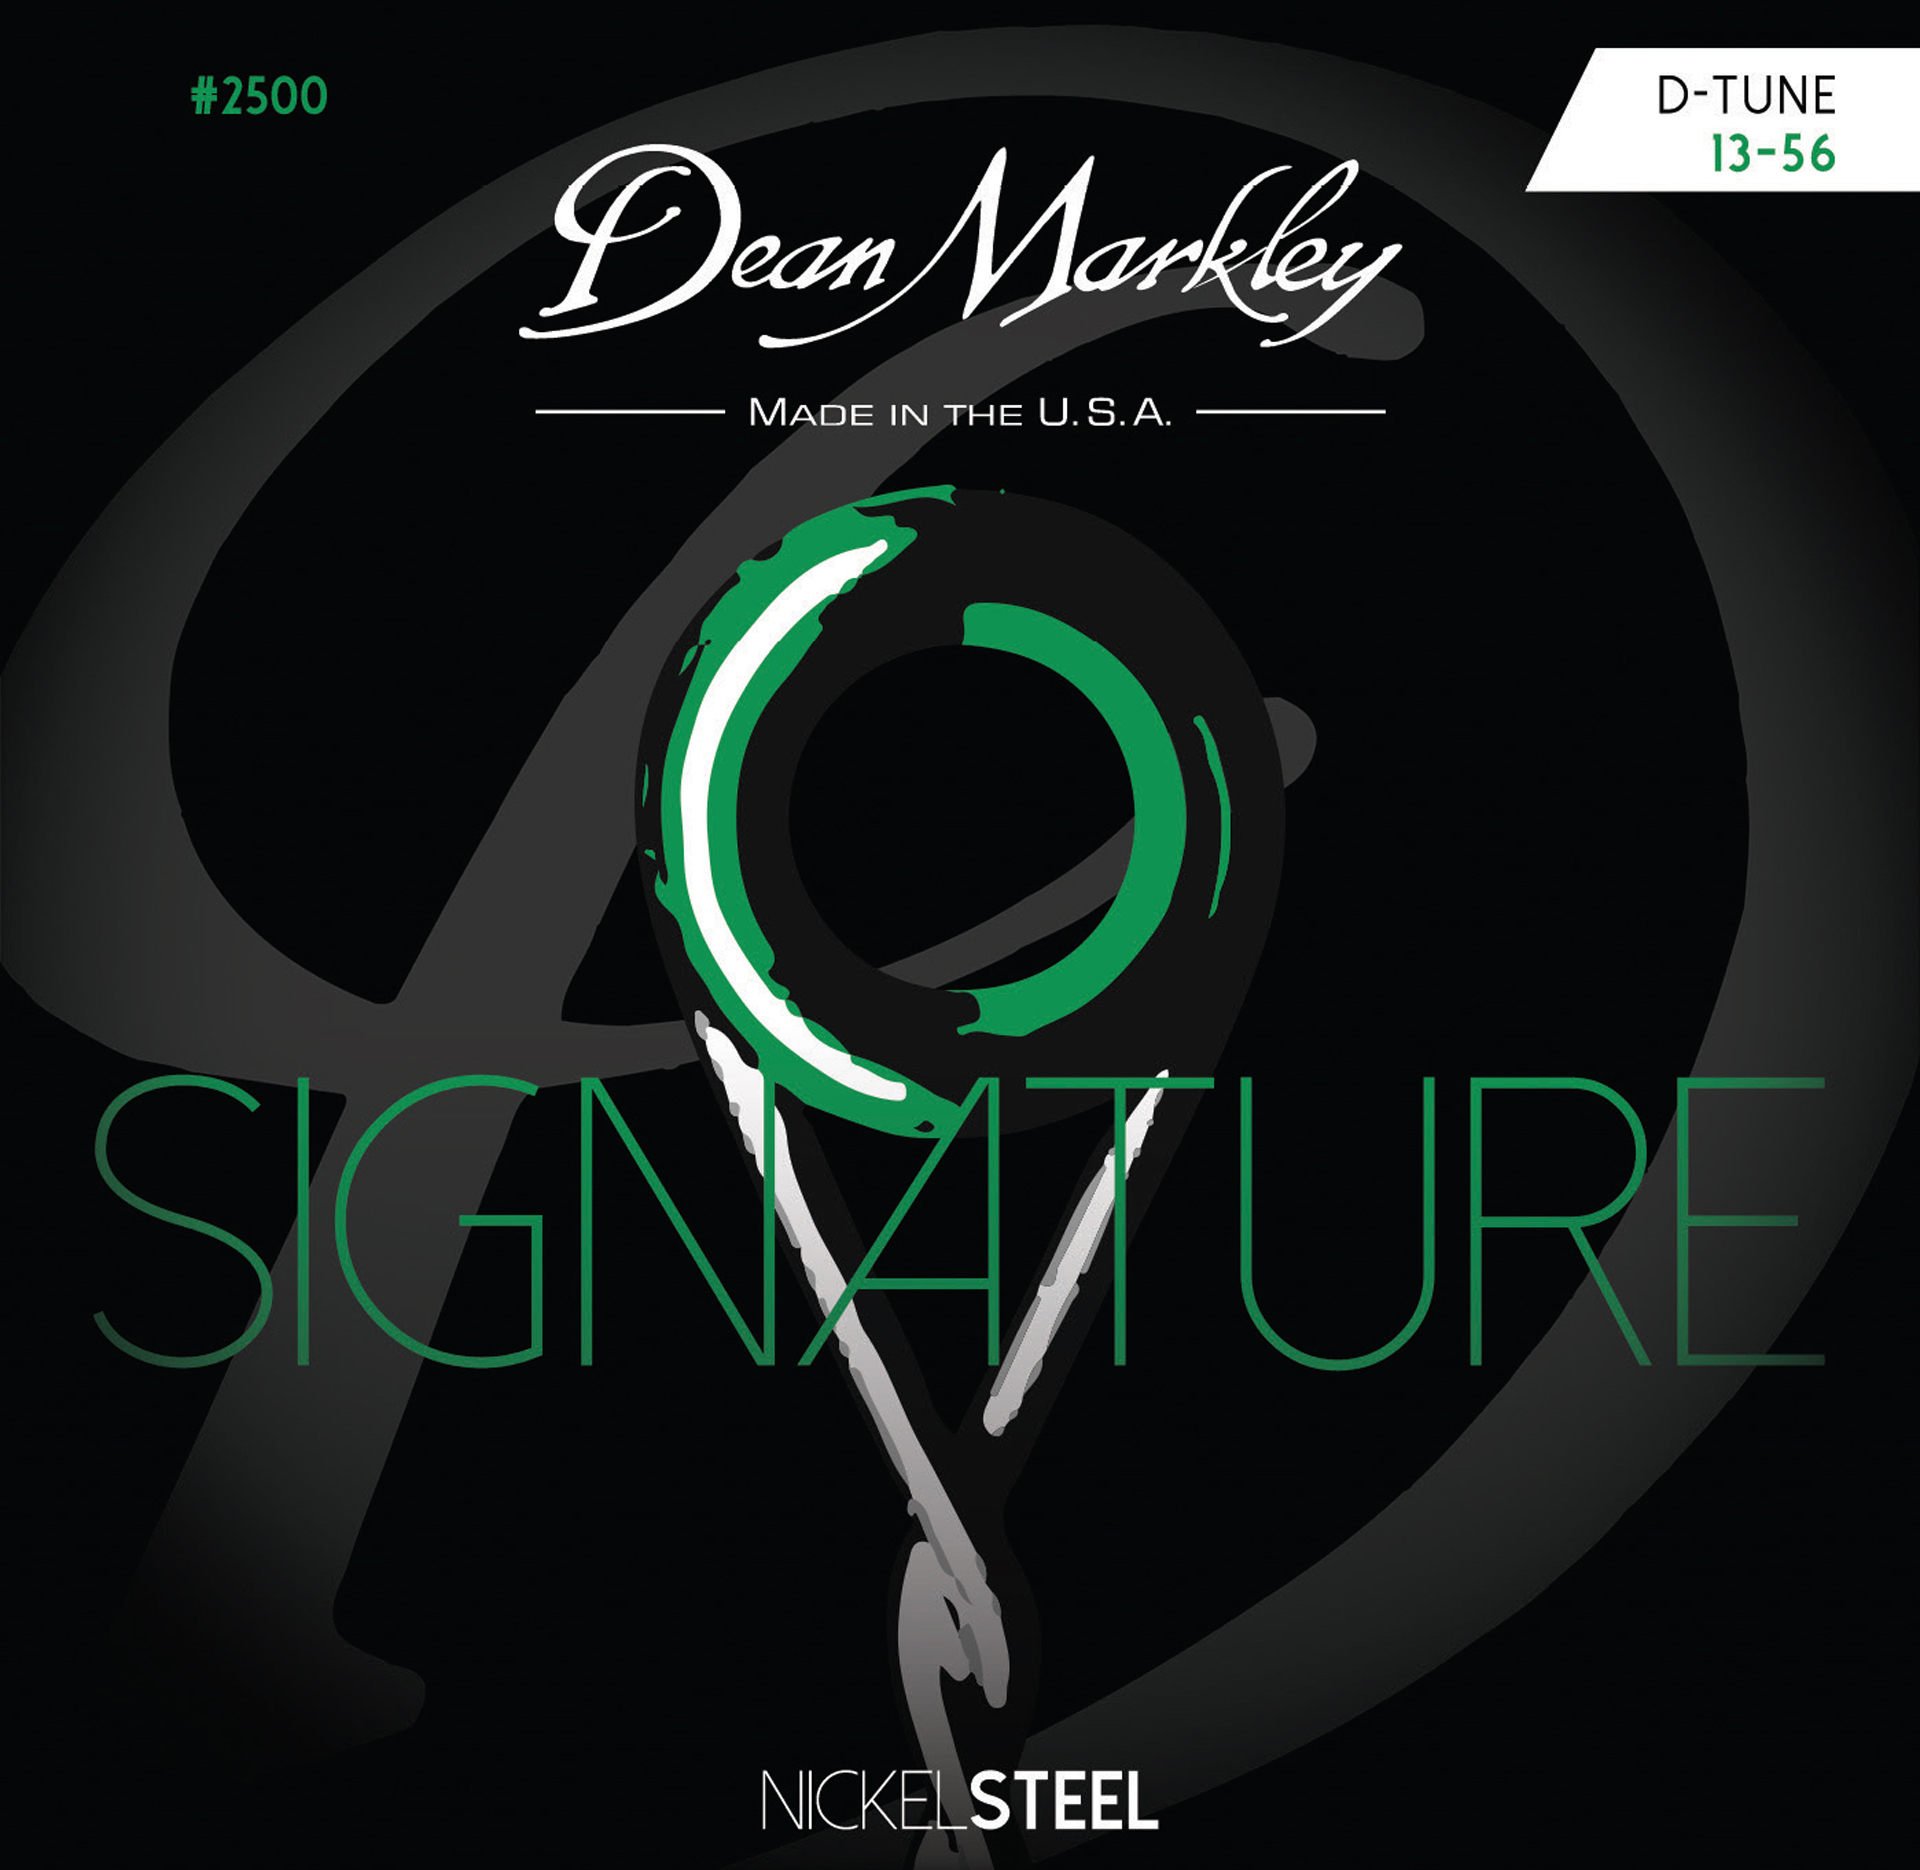 Dean Markley Signature - 2500 - Electric Guitar String Set, DropTune, .013-.056